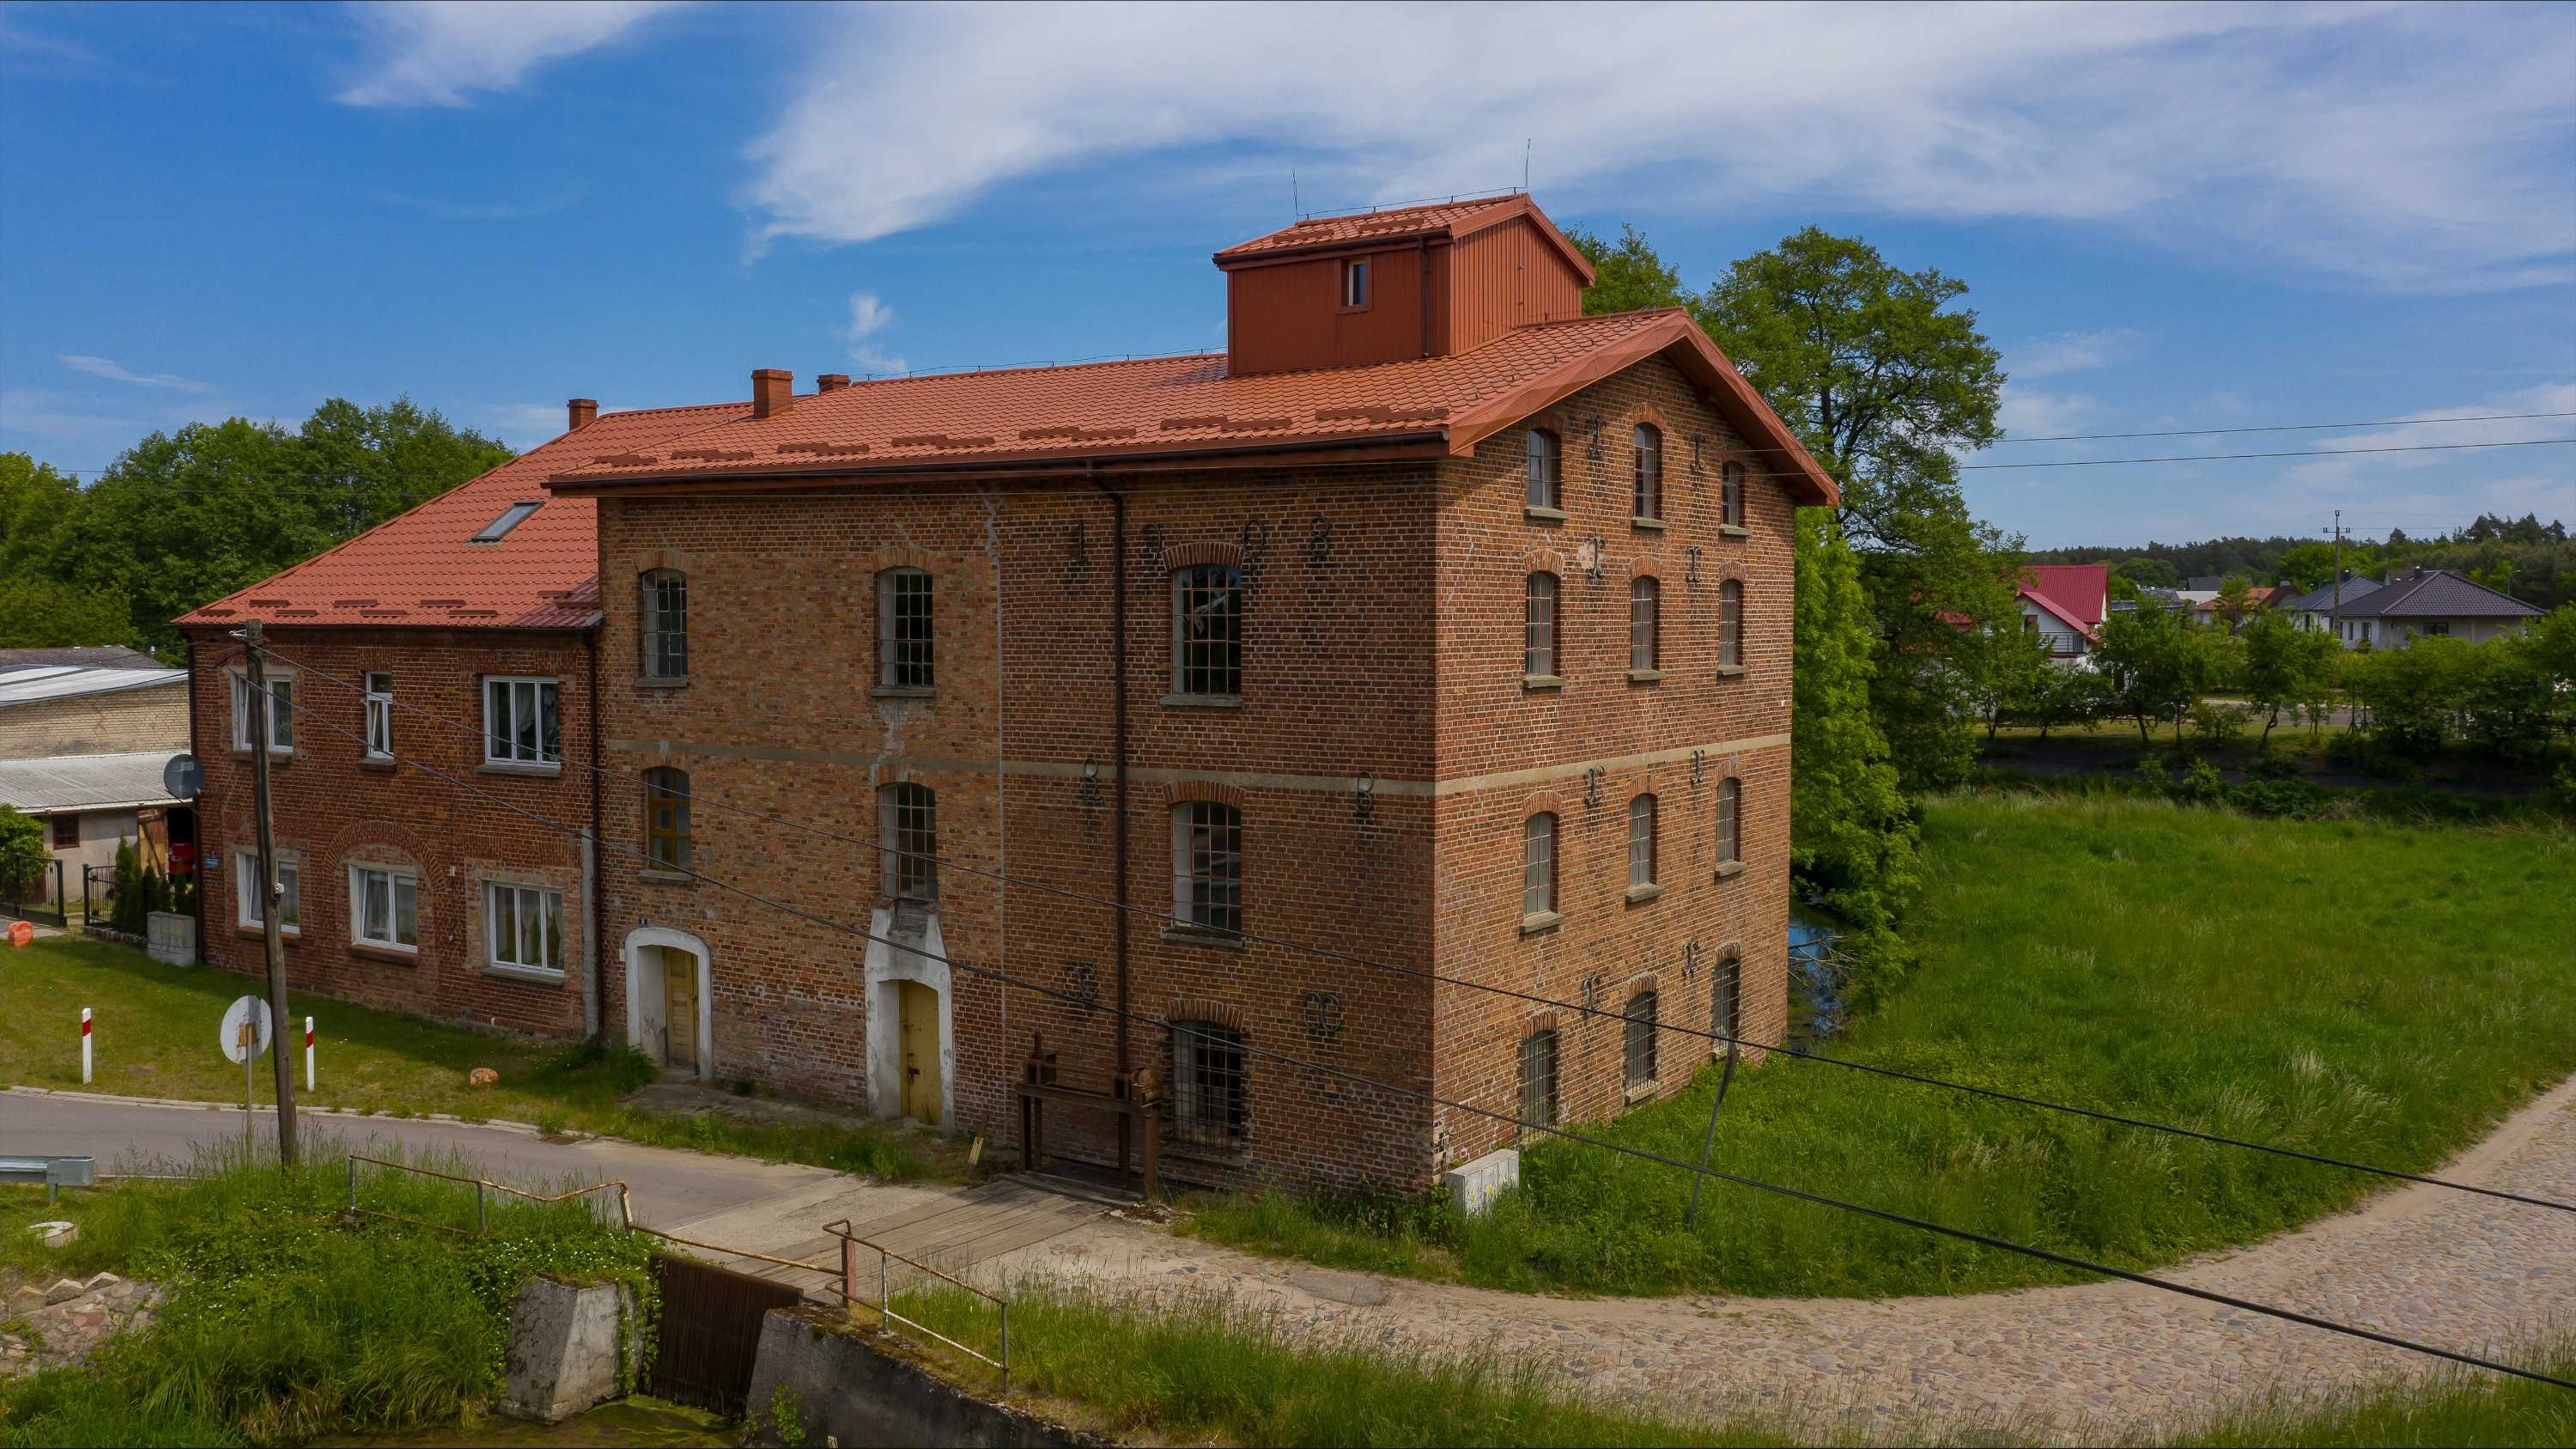 Photos Historical mill in Slawoborze / Swidwin, West Pomerania